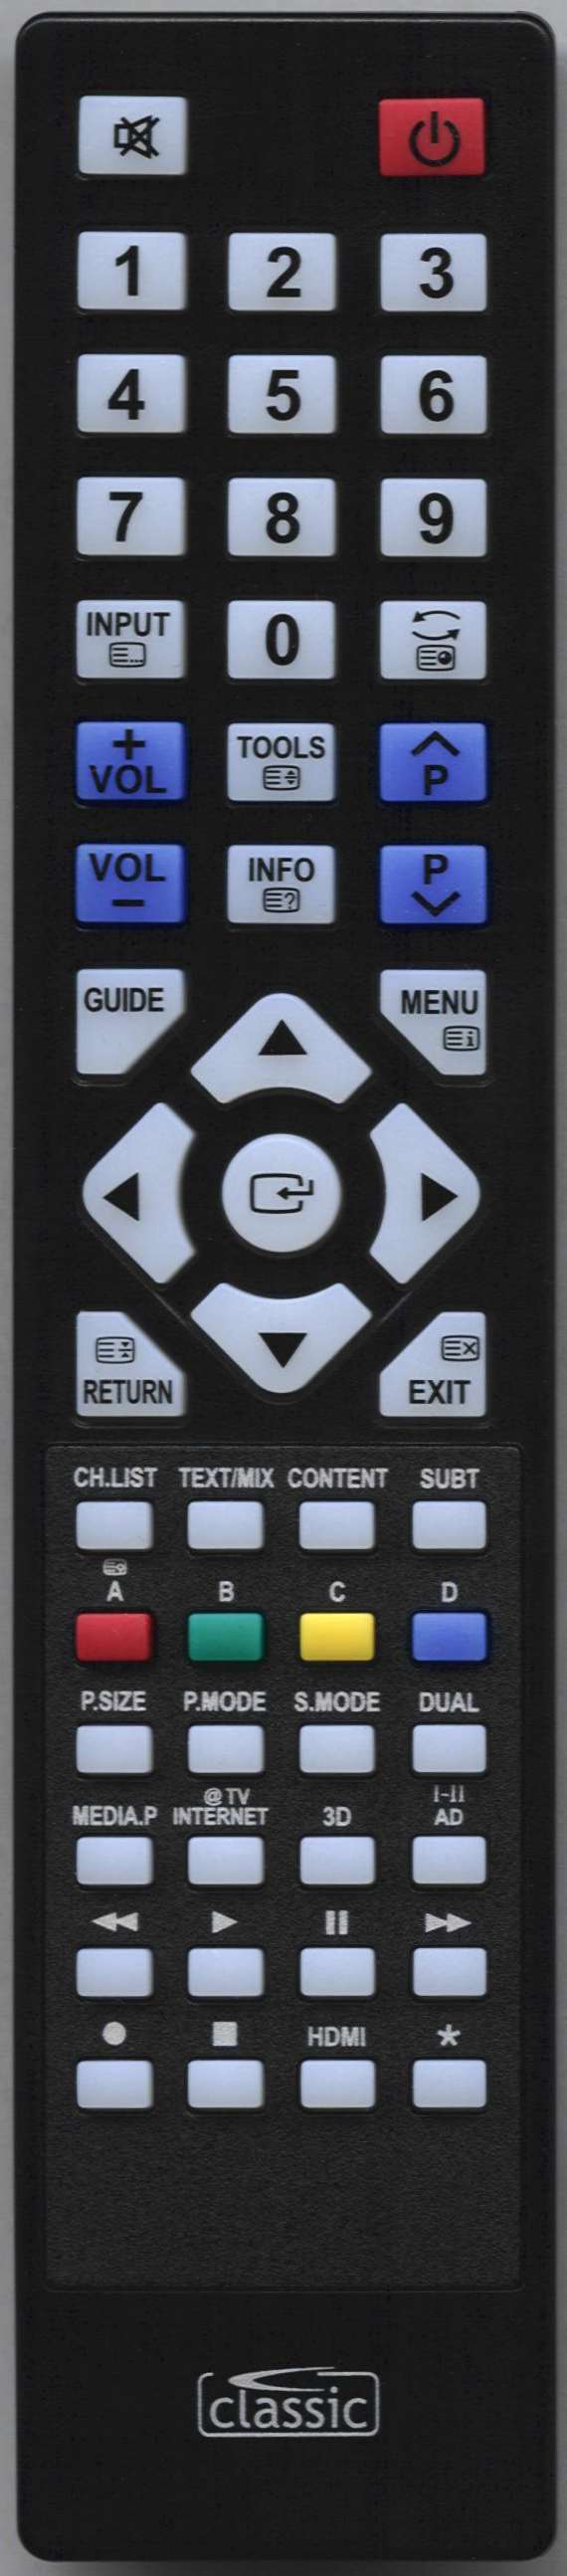 SAMSUNG PS50C6500TK Remote Control Alternative